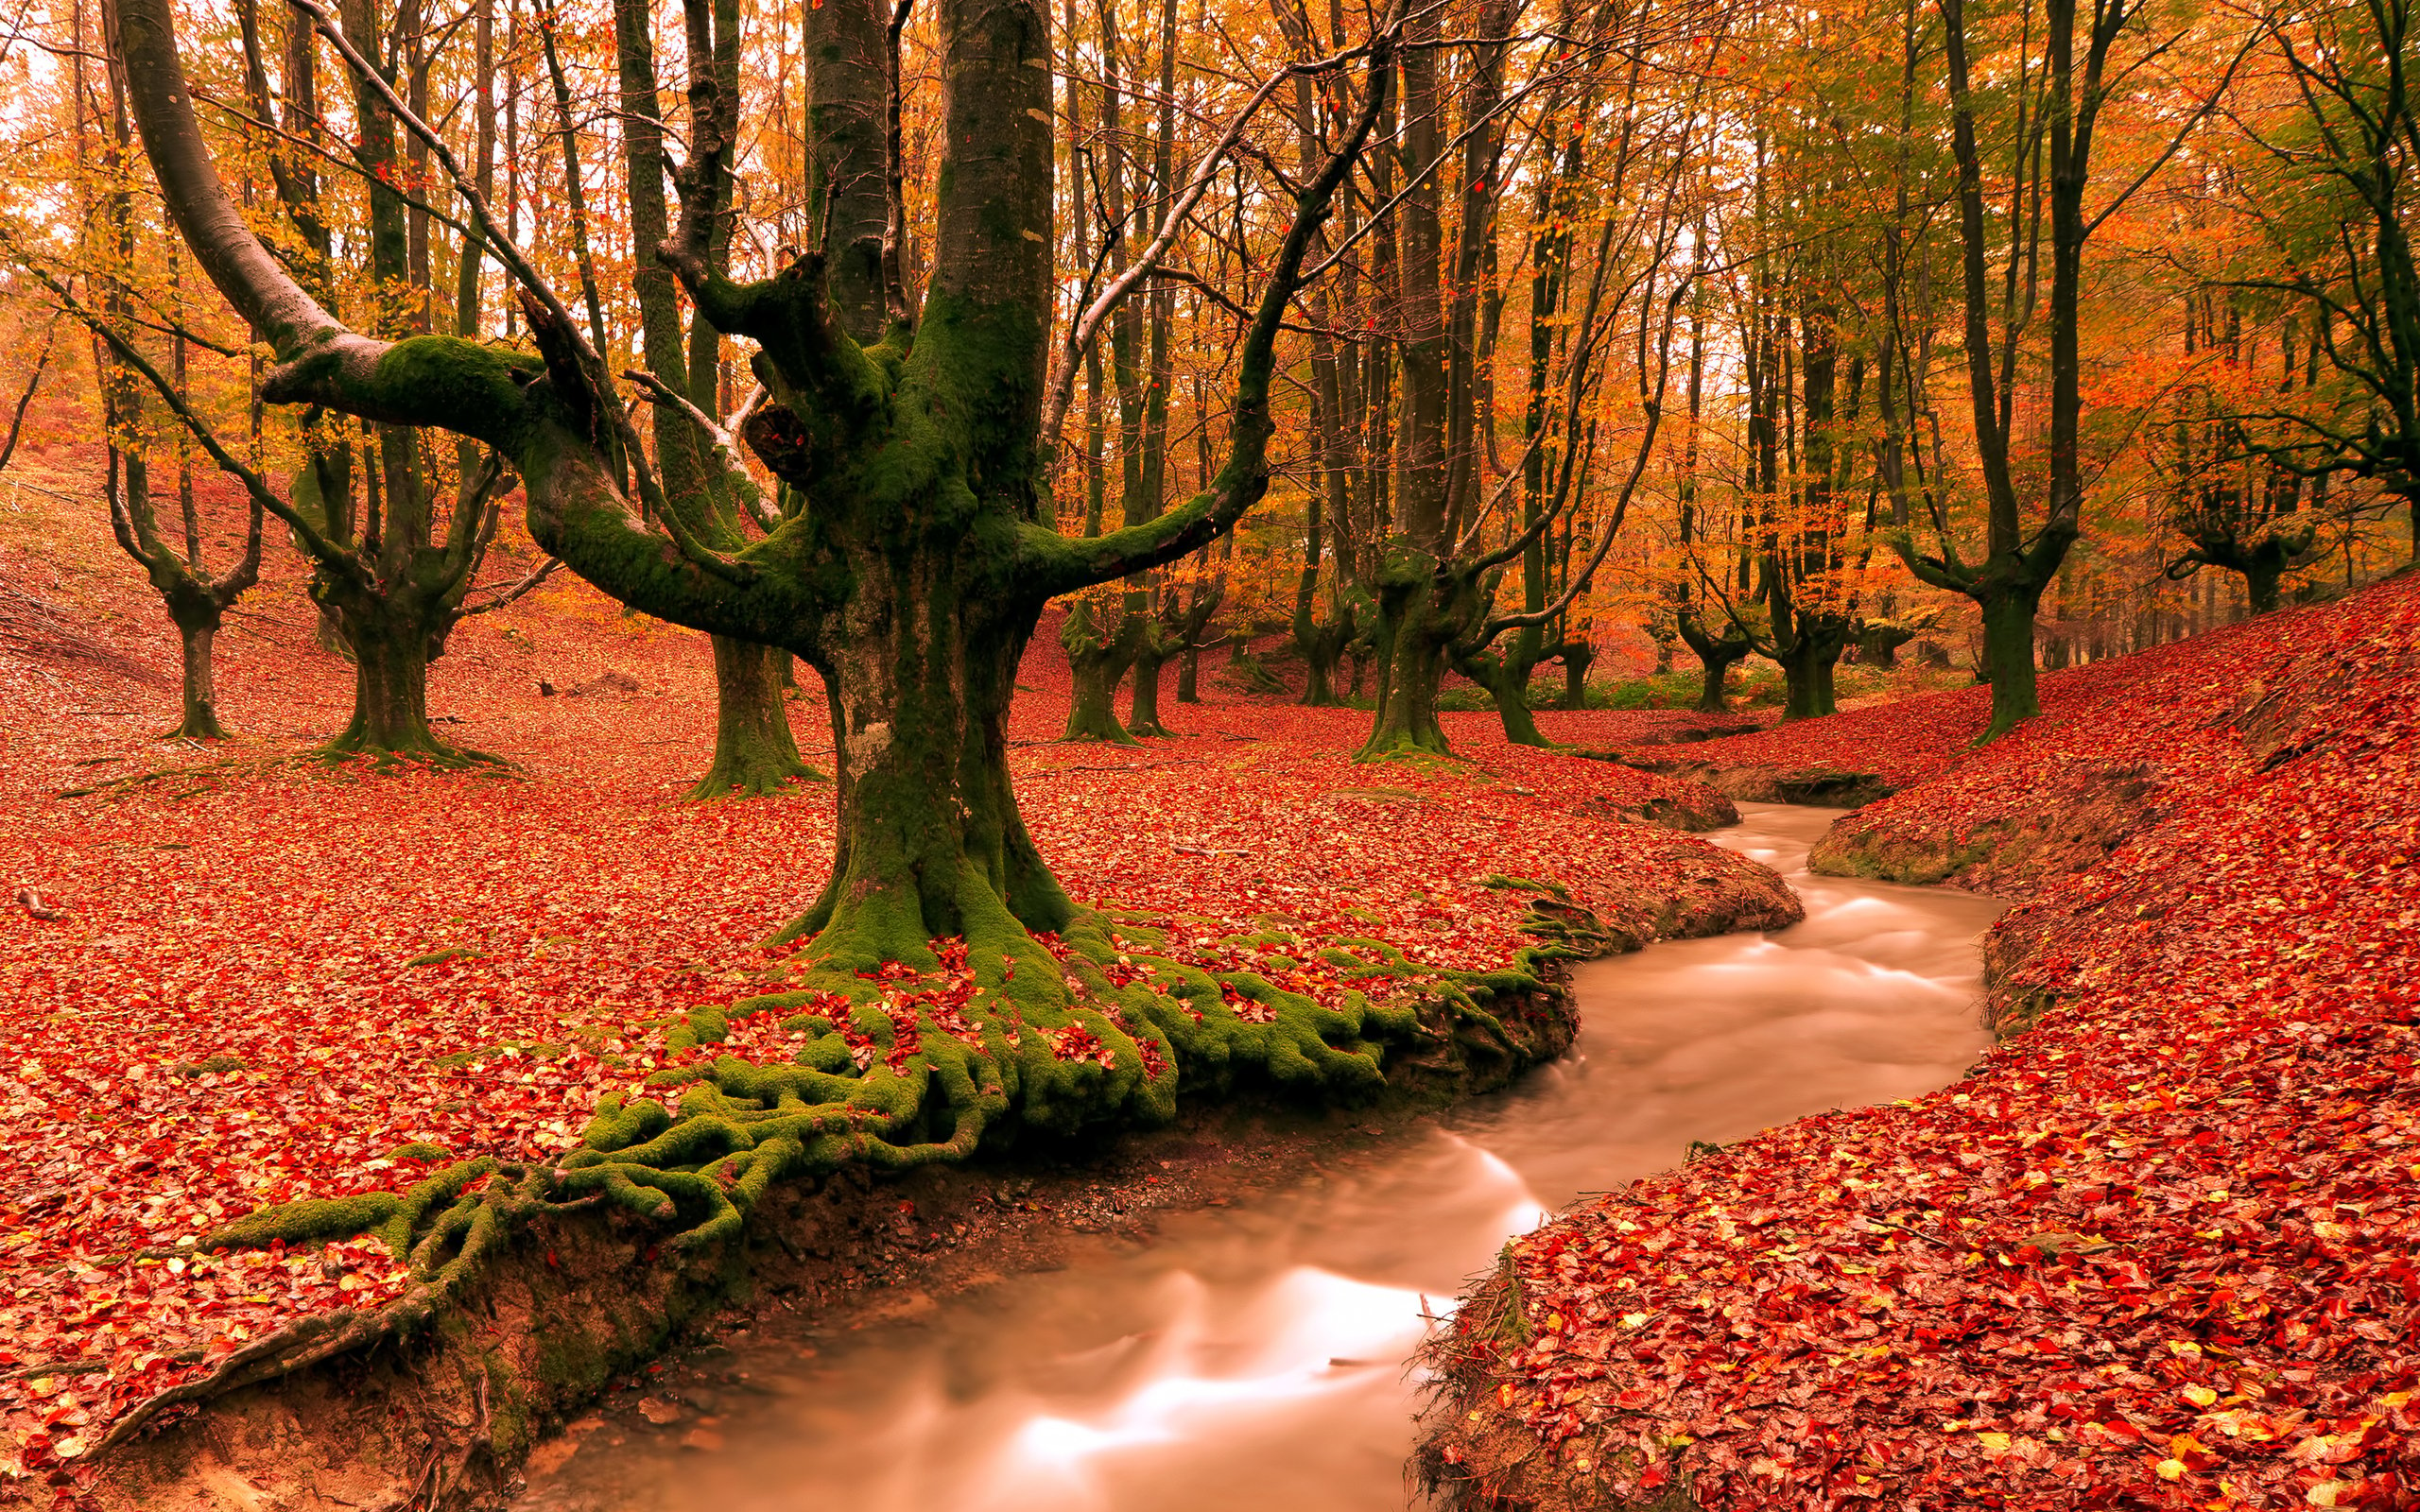  images of autumn desktop wallpapers free on latoro wallpaperhtml 2560x1600